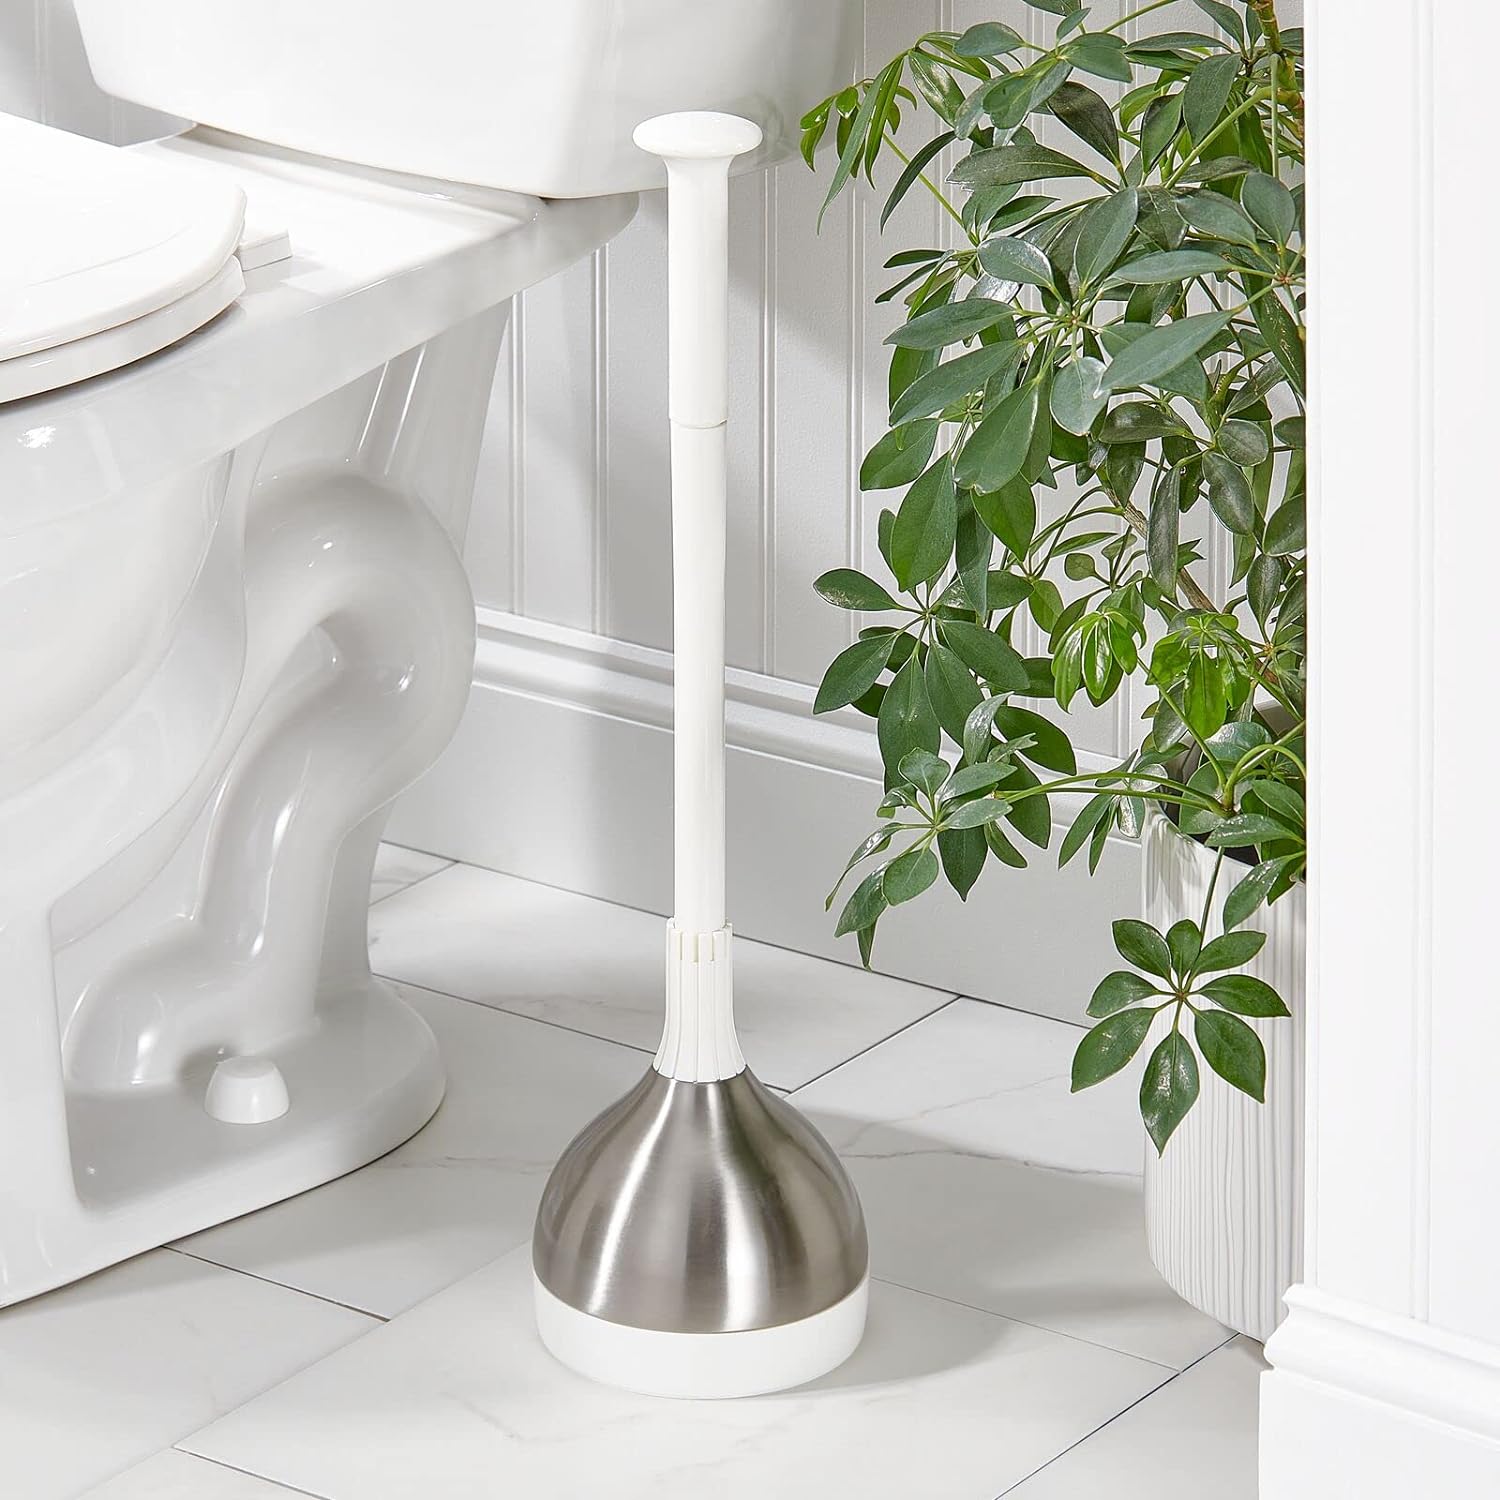 MetroDecor mDesign Bathroom Toilet Bowl Plunger Set with Lift